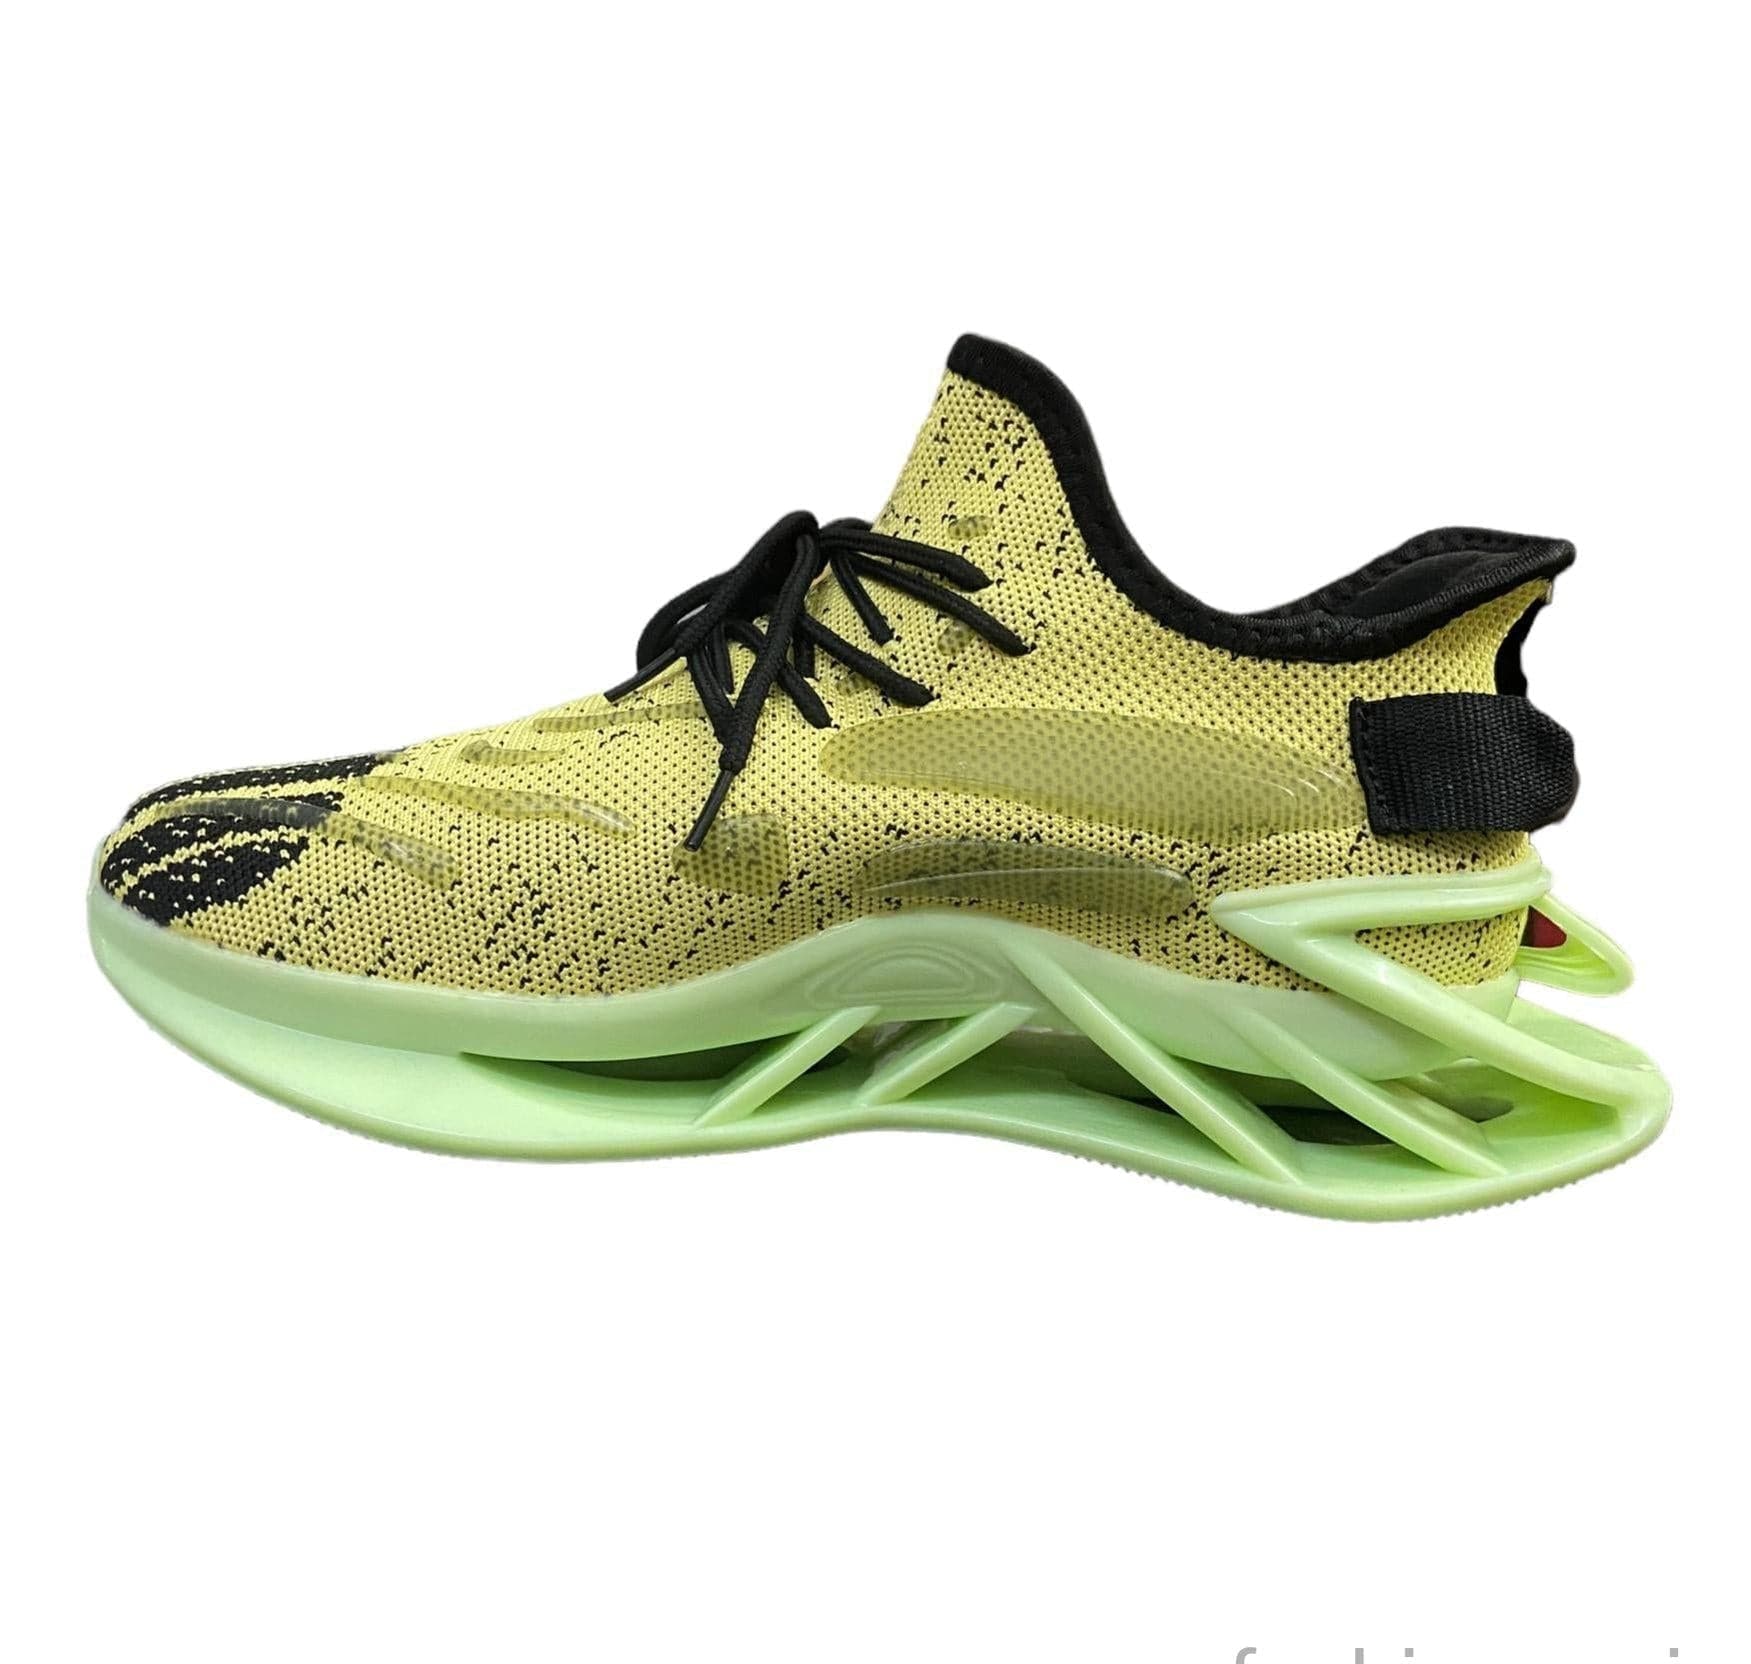 "Radium light Green" trail mesh athletic trainer sneaker shoes fashionray.in